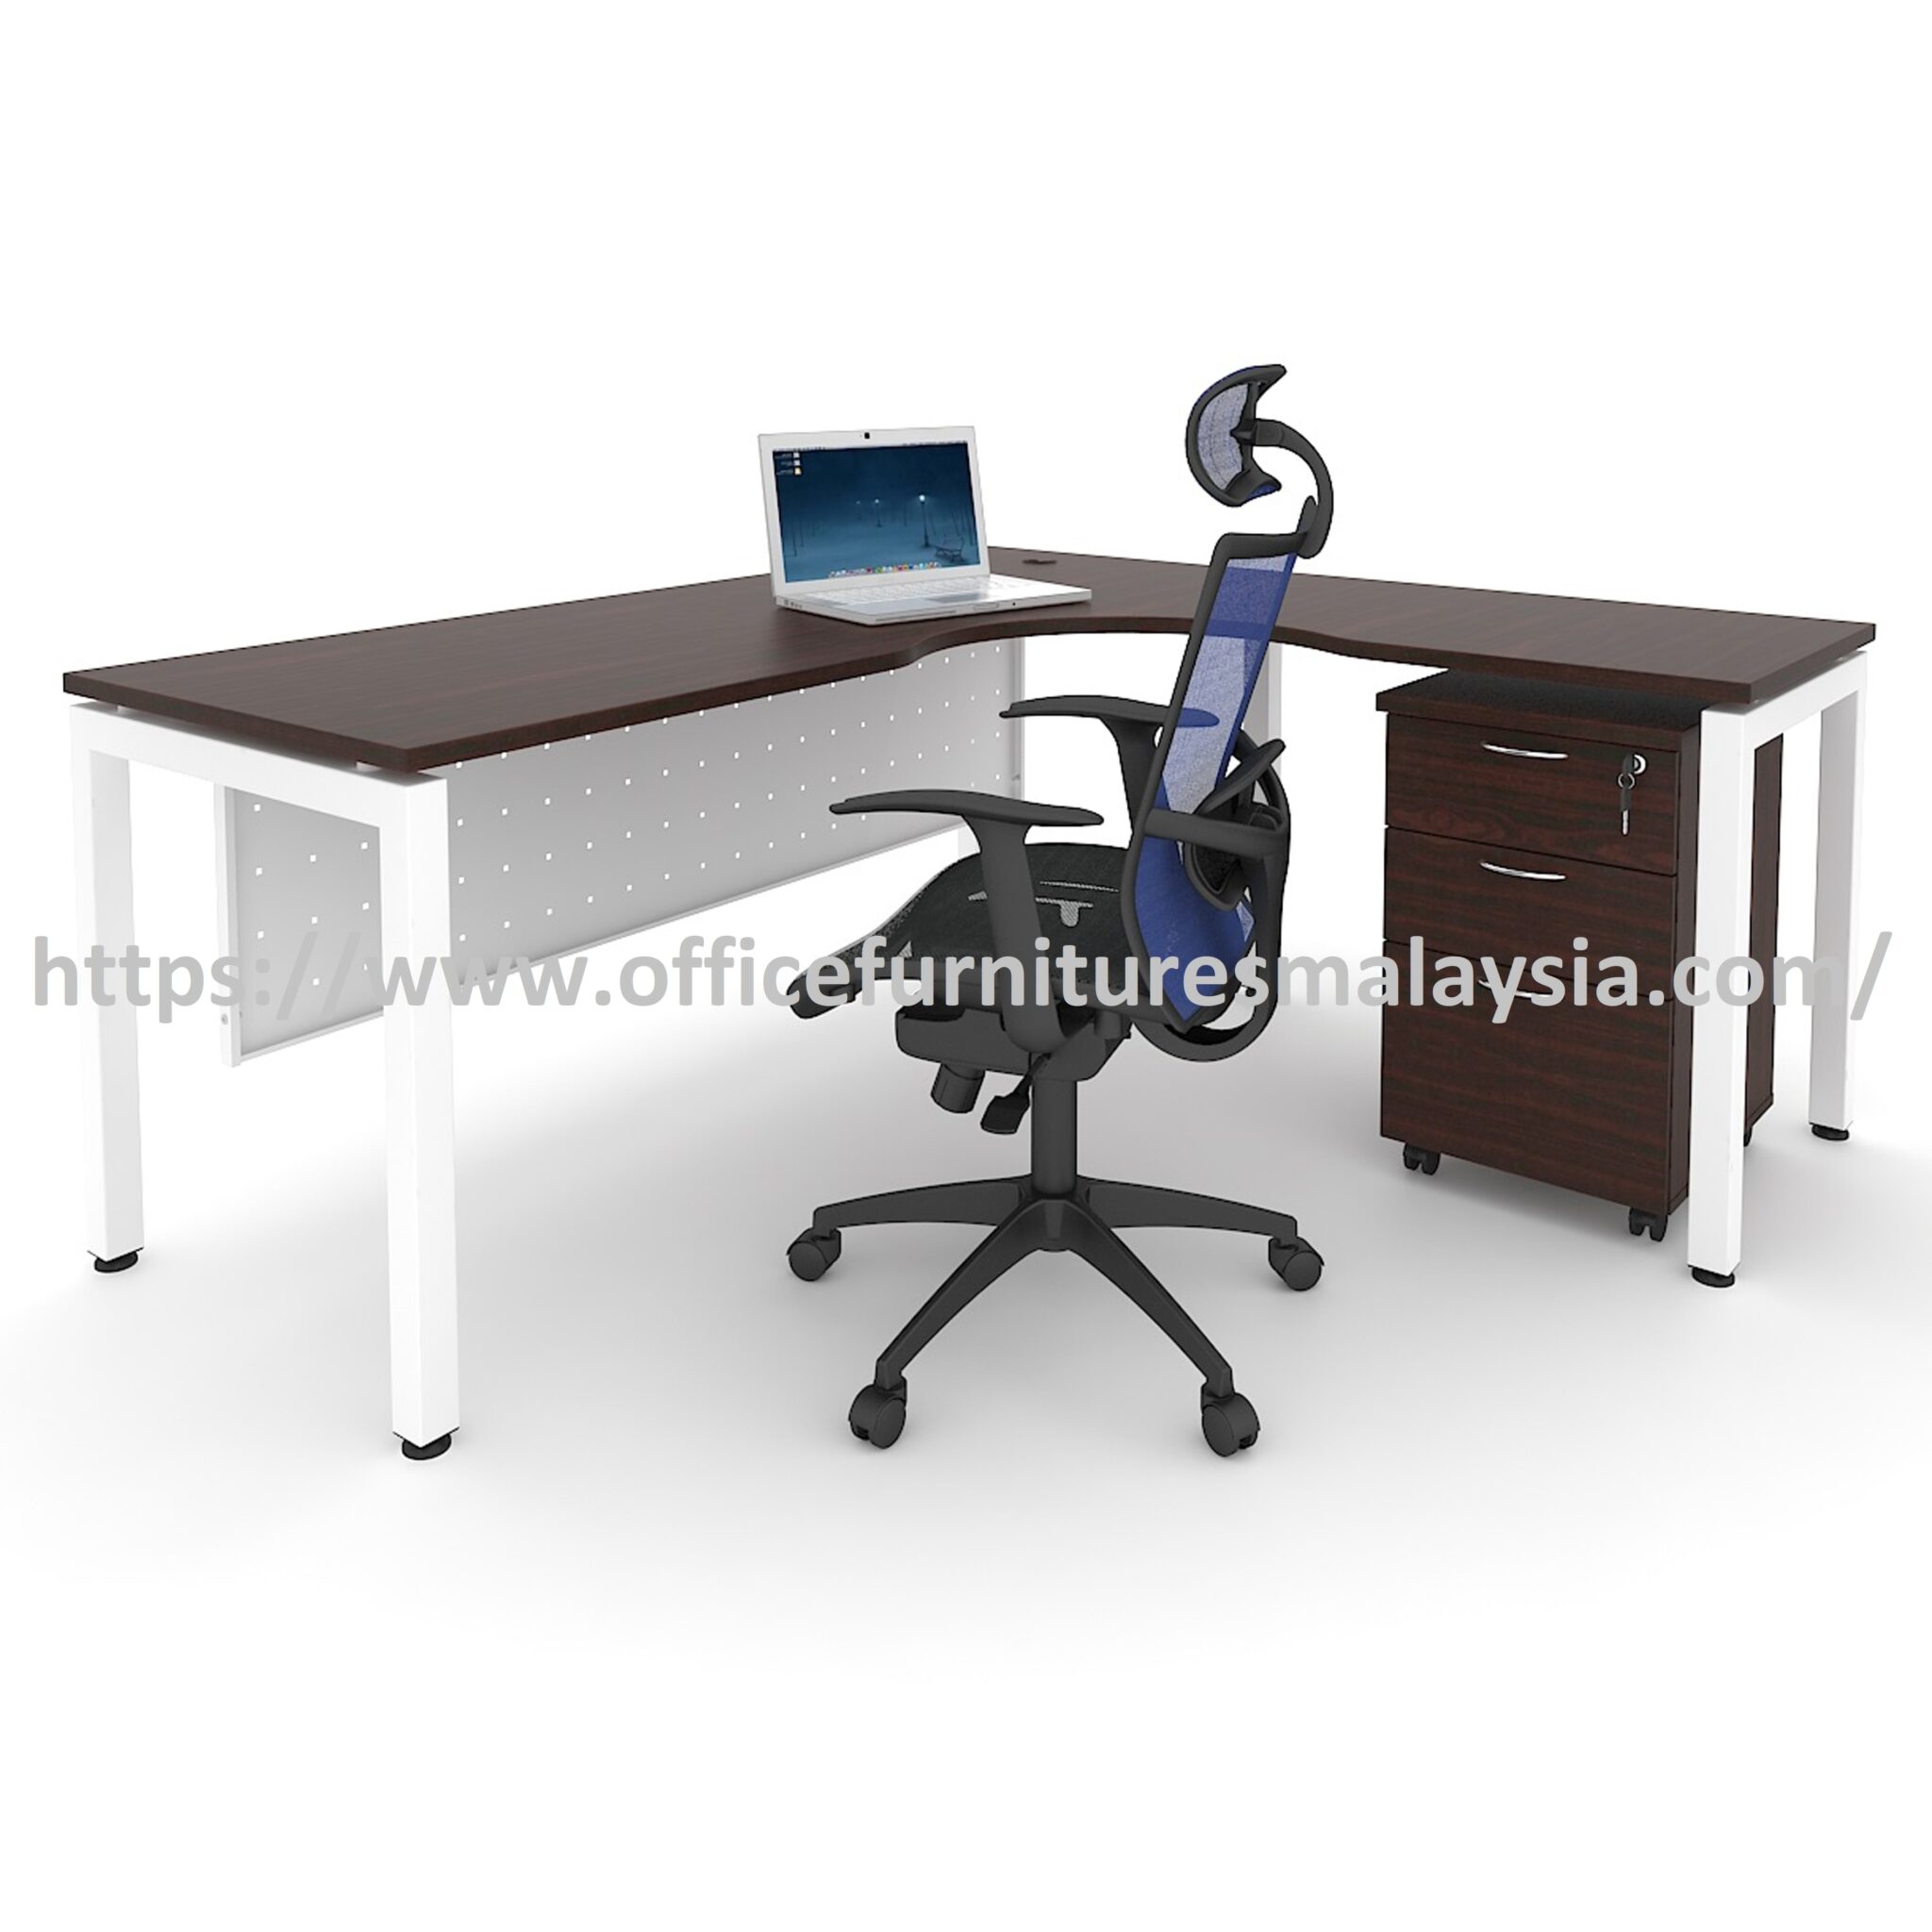 6 ft Stylish L shape Executive Office Table Design - meja boss online shop